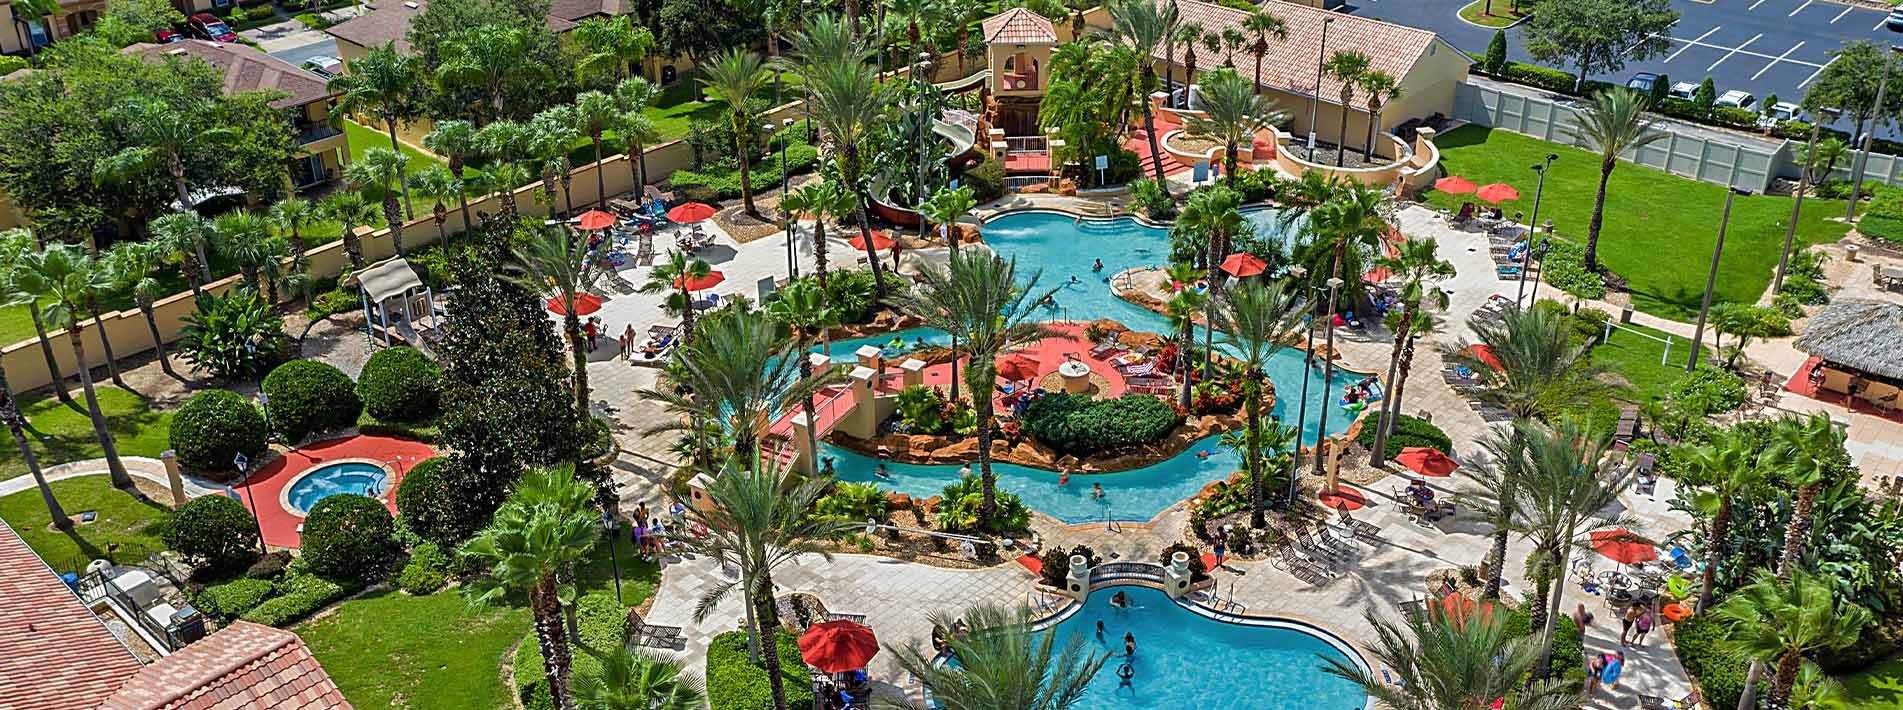 Regal Palms Resort Florida